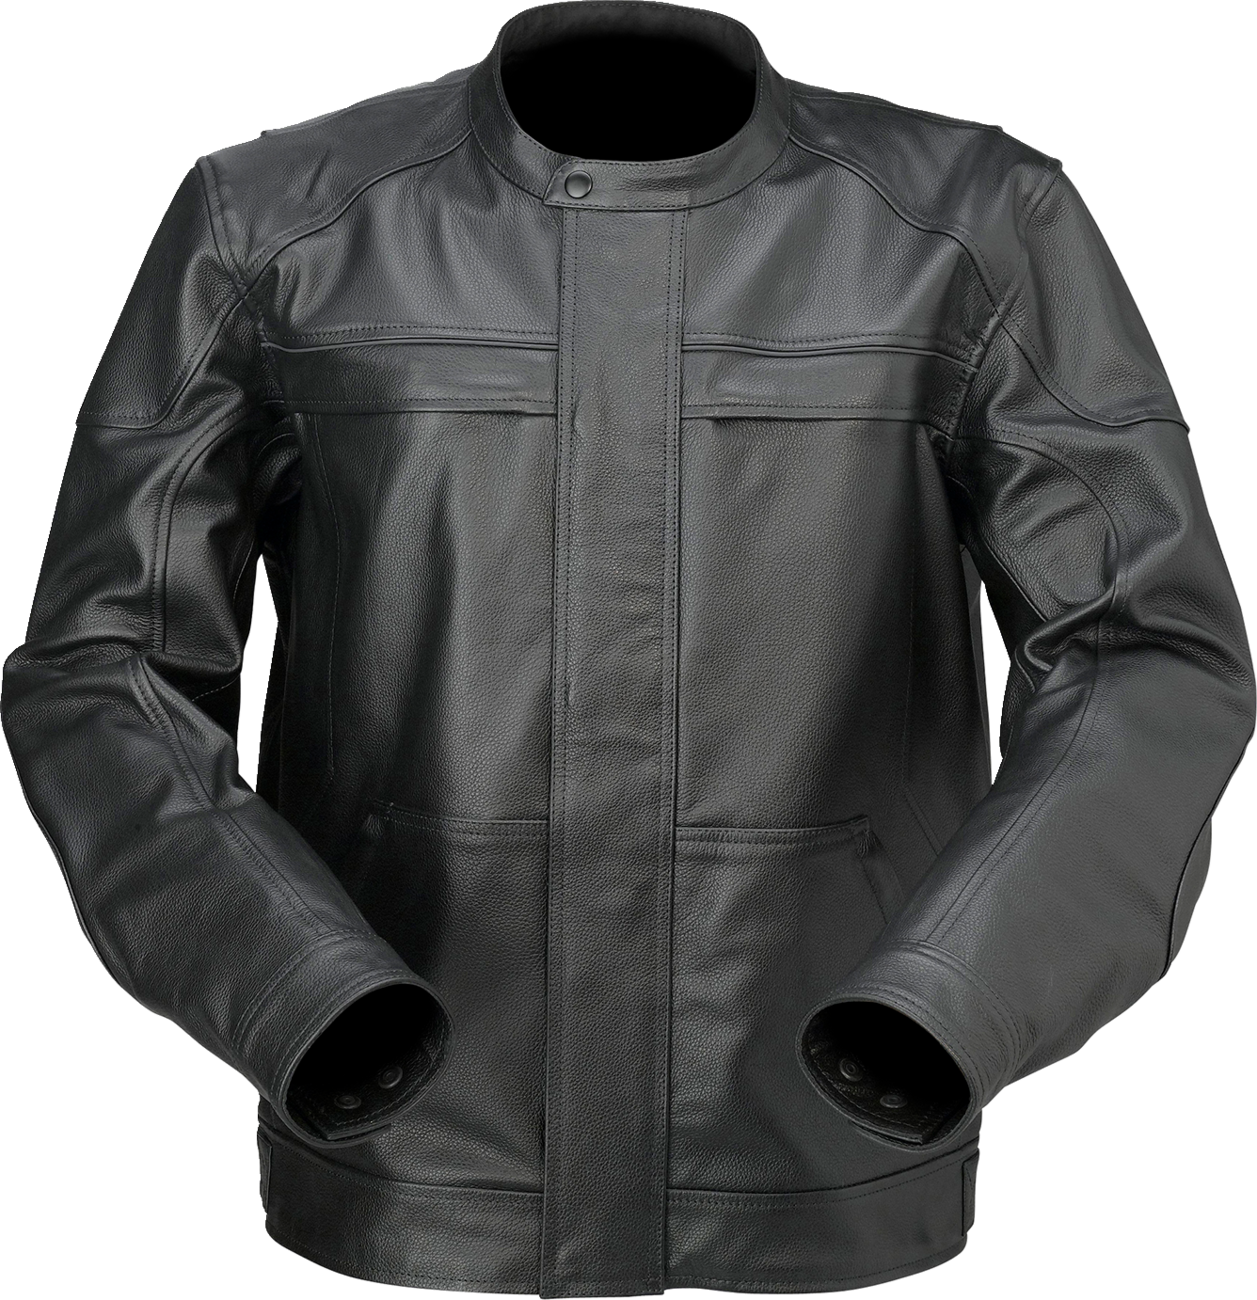 Z1R Justifier Leather Jacket - Black - Medium 2810-3913